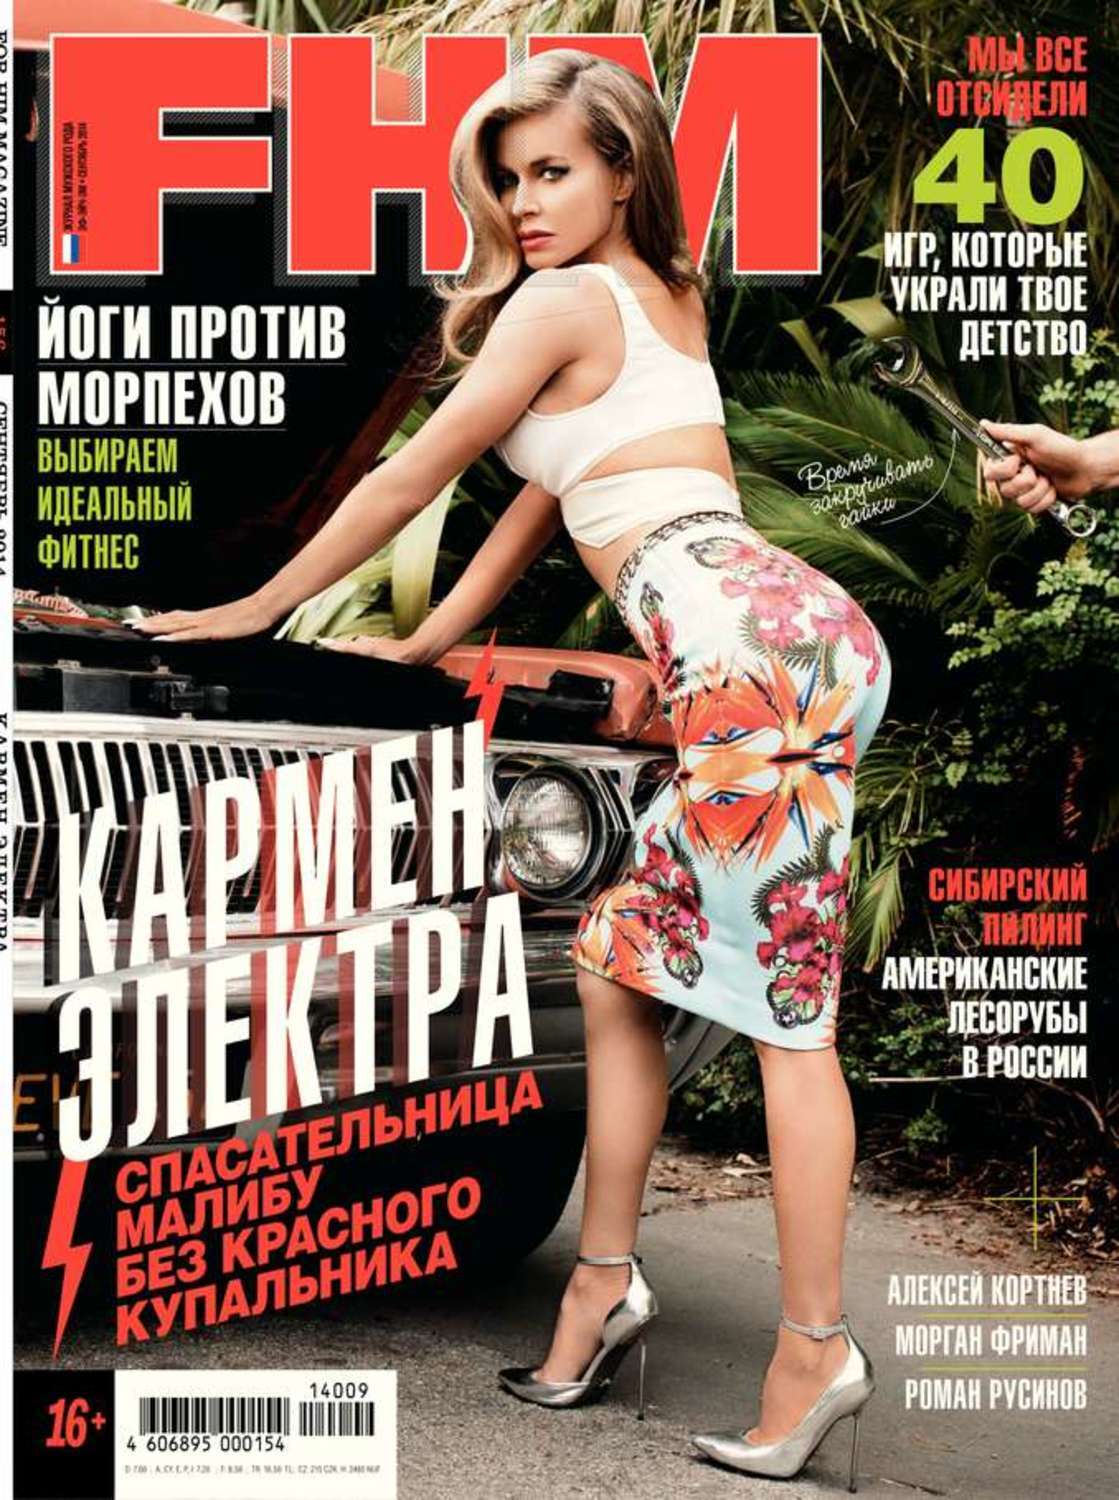 Купить magazine. FHM журнал. Журнал FHM Россия. Обложки журнала FHM Russia. Журналы 18 +.